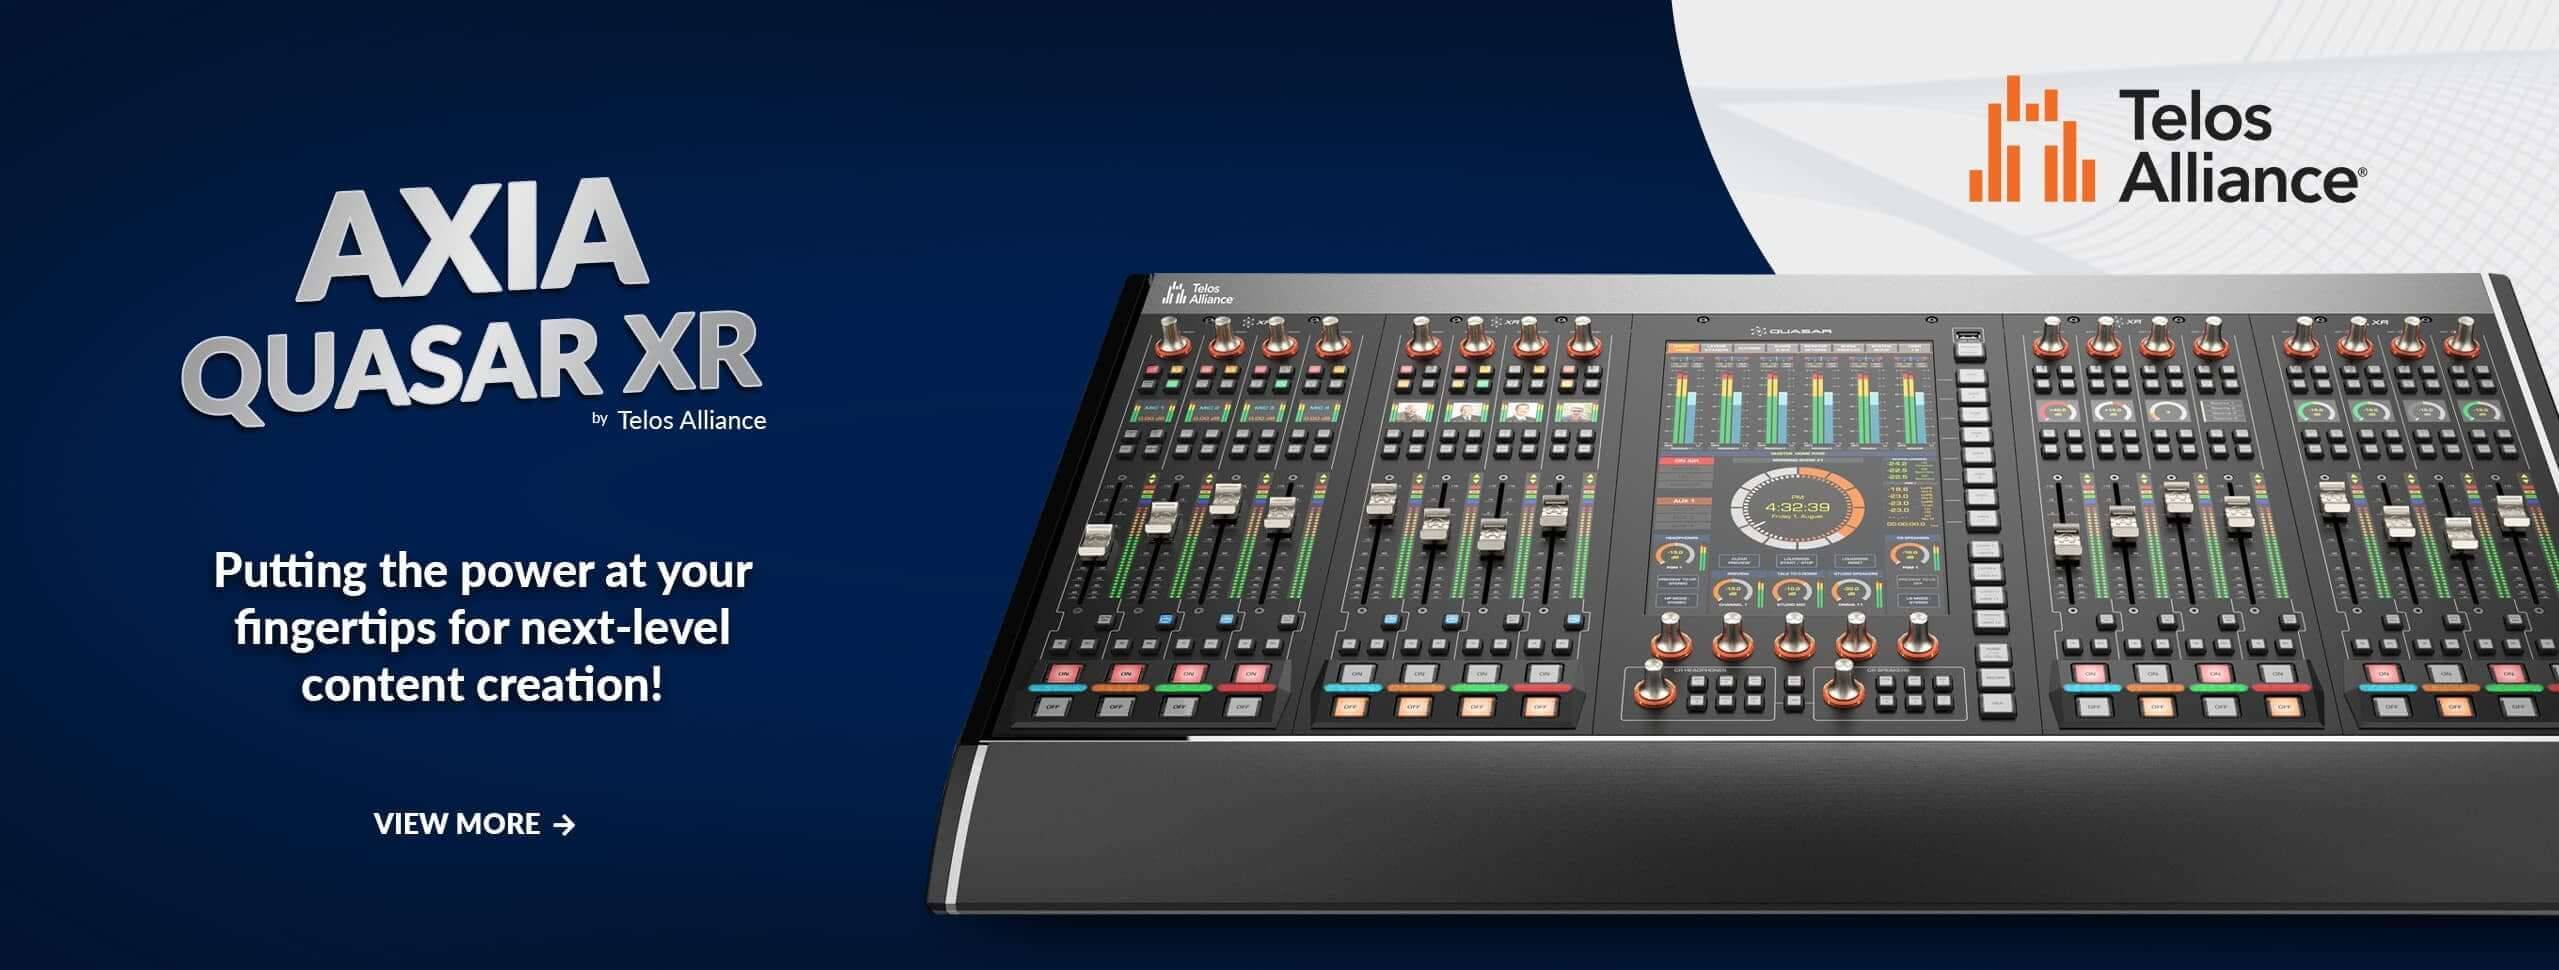 Banner Consola de mezclas de audio profesional AXIA Quasar XR con faders y botones iluminados, pantalla de indicadores gráficos, de Telos Alliance para producción de contenido avanzado.